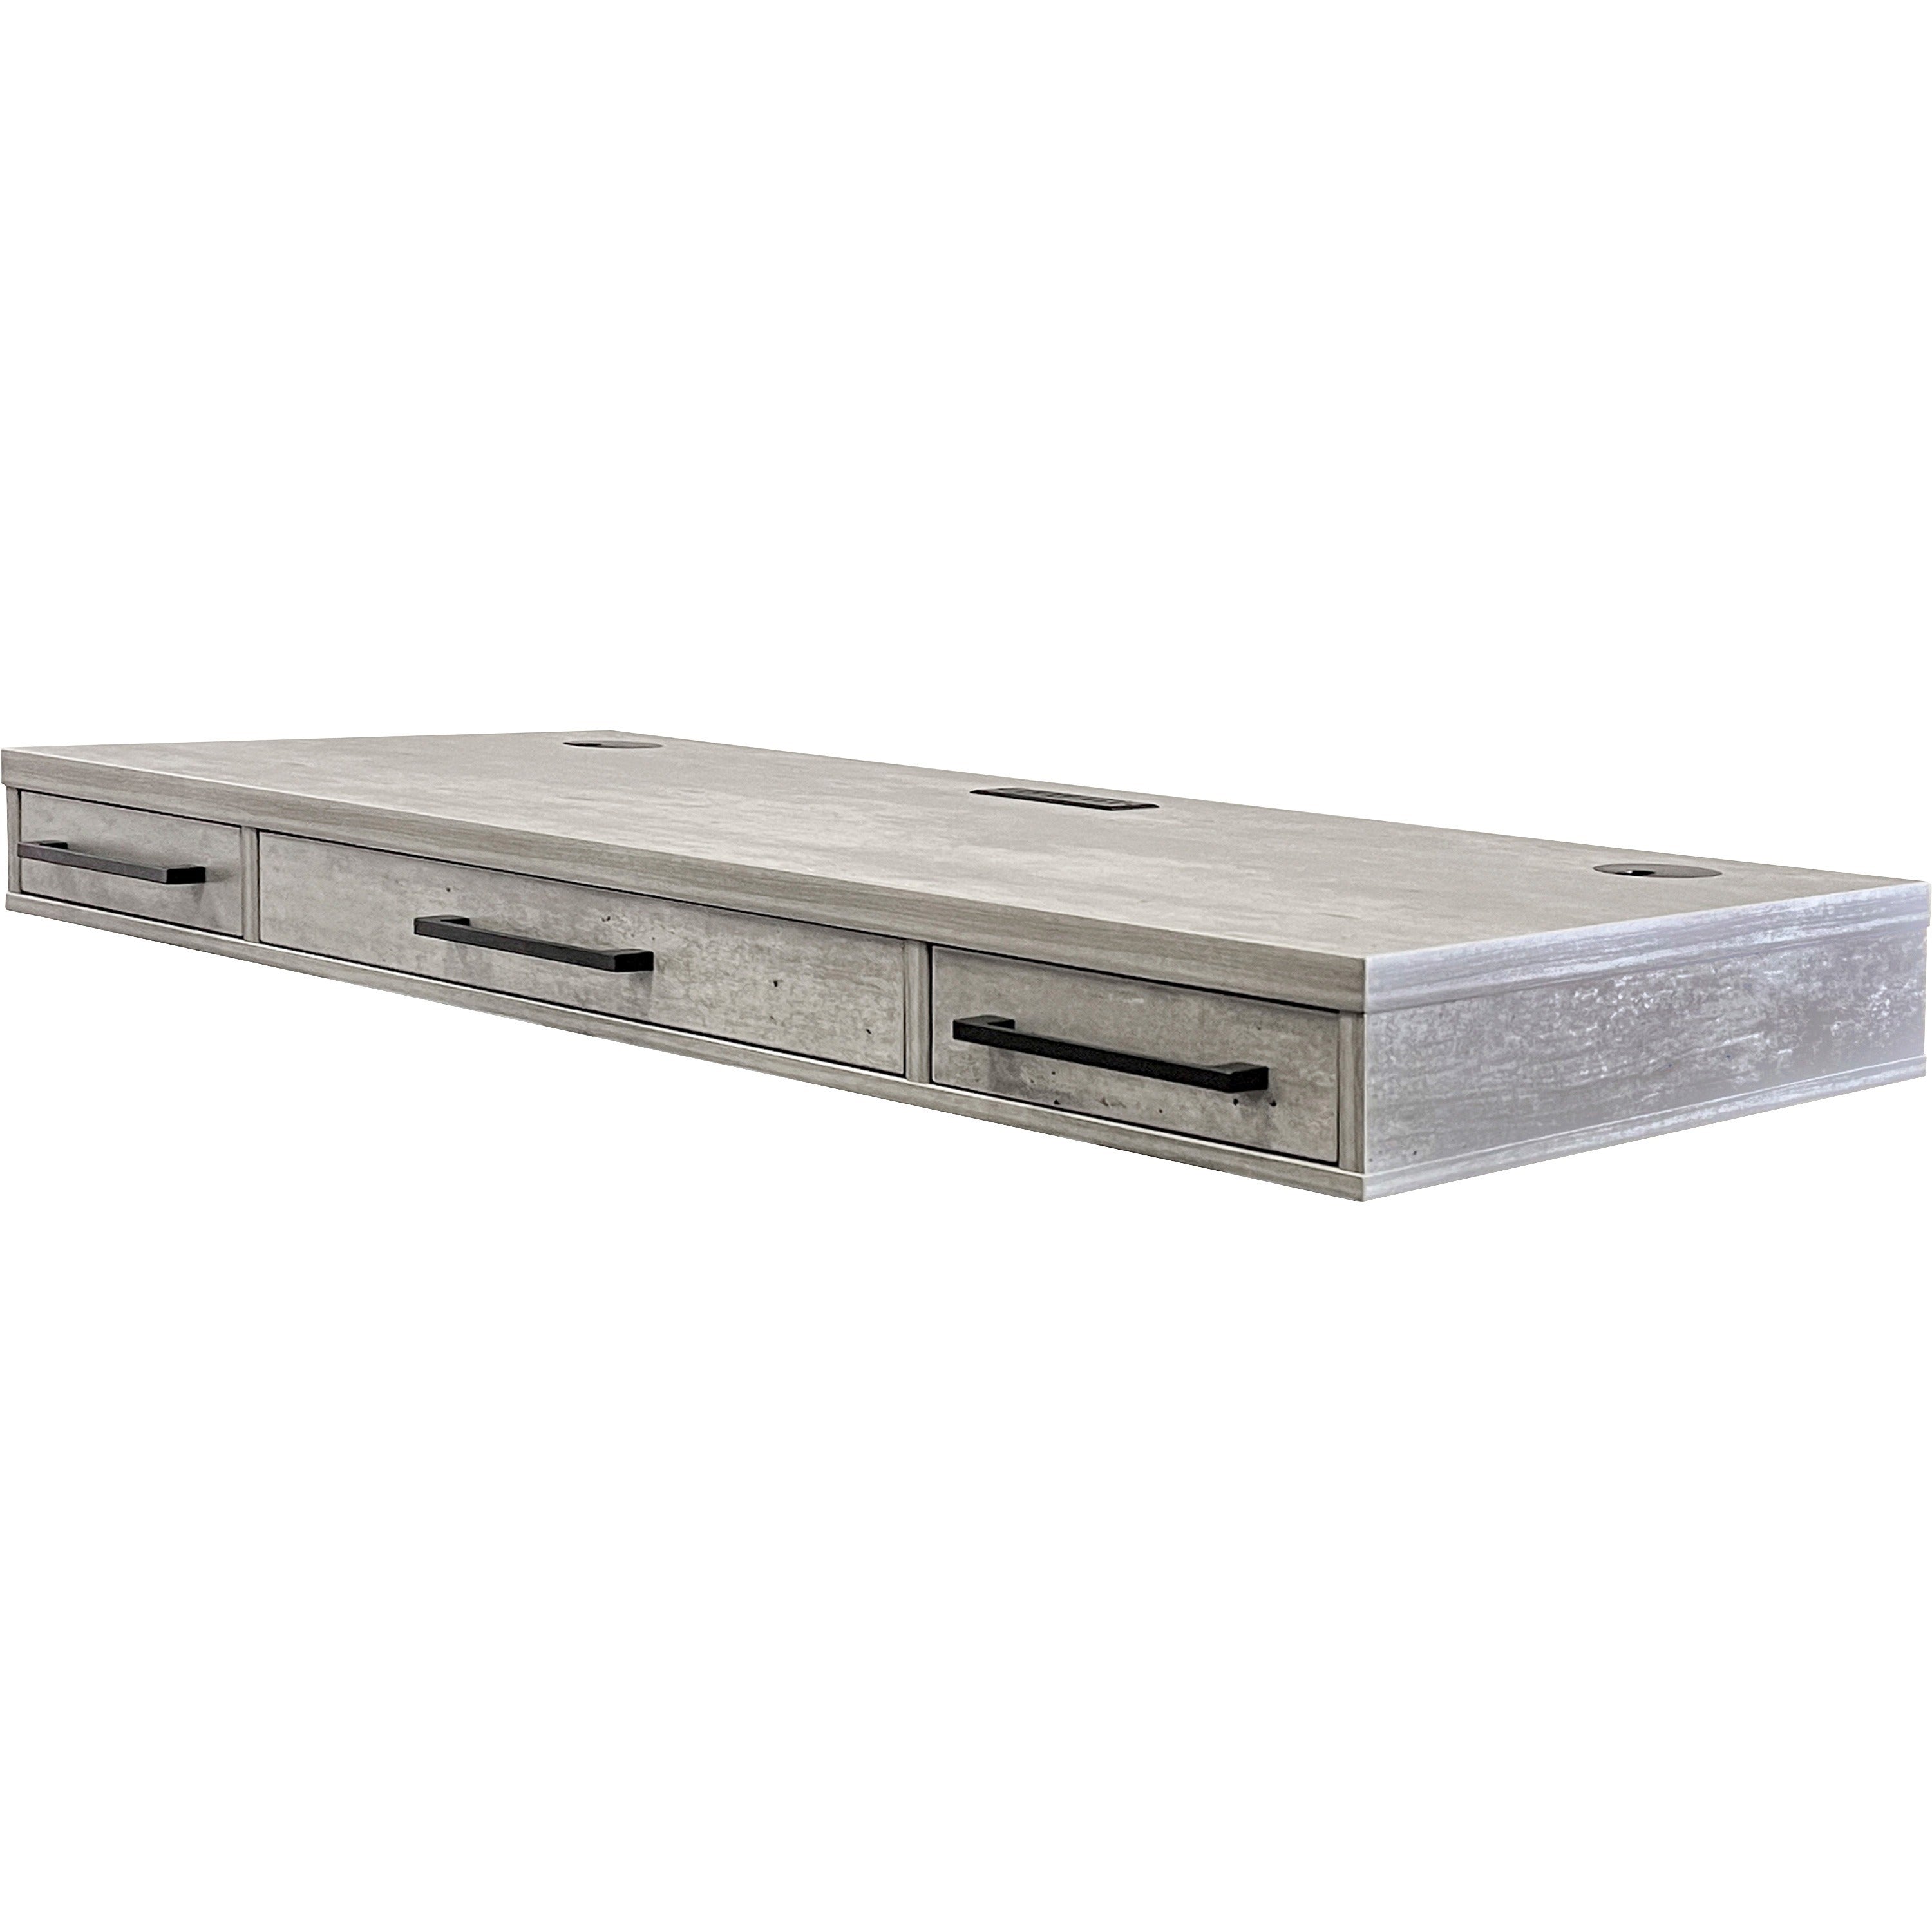 martin-mason-sit-stand-desktop-box-1-of-2-60-width-x-24-depth-concrete_mrtmnc384t - 1